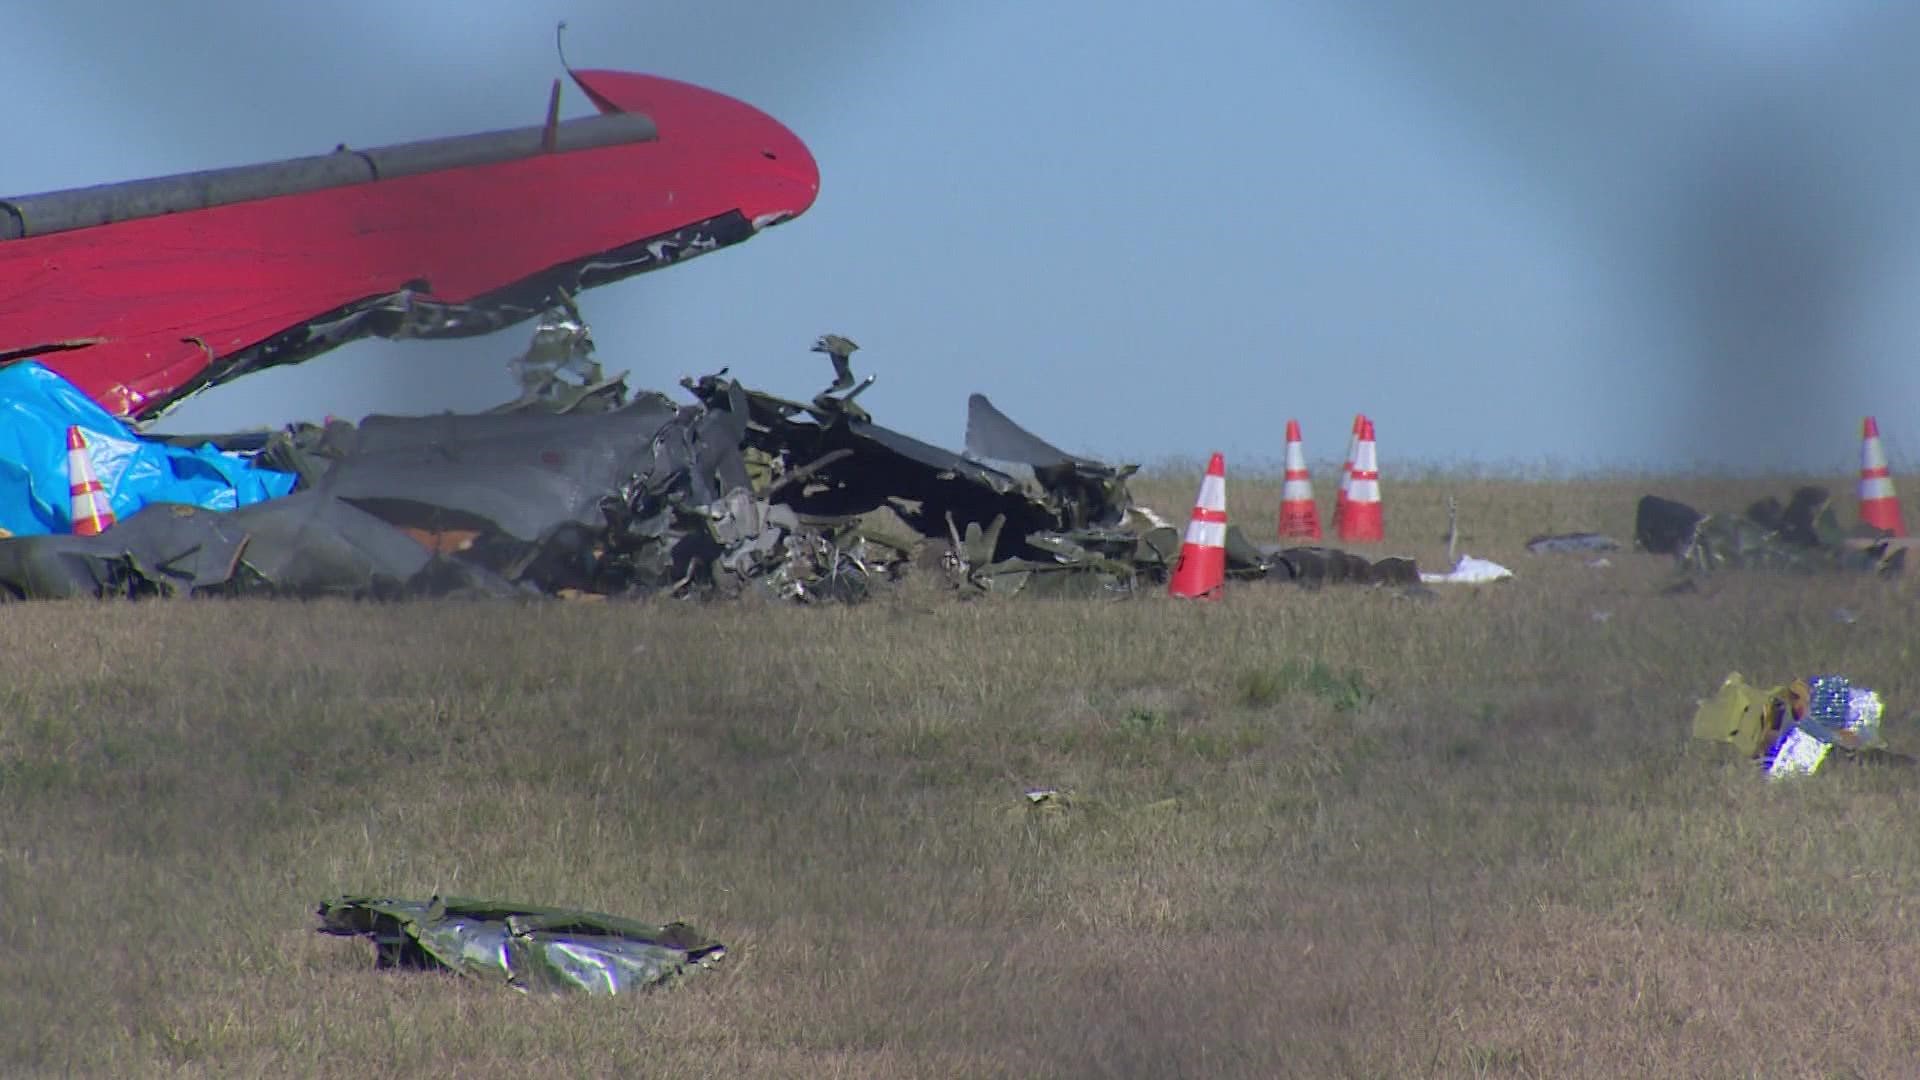 Video Two planes crash at Dallas air show